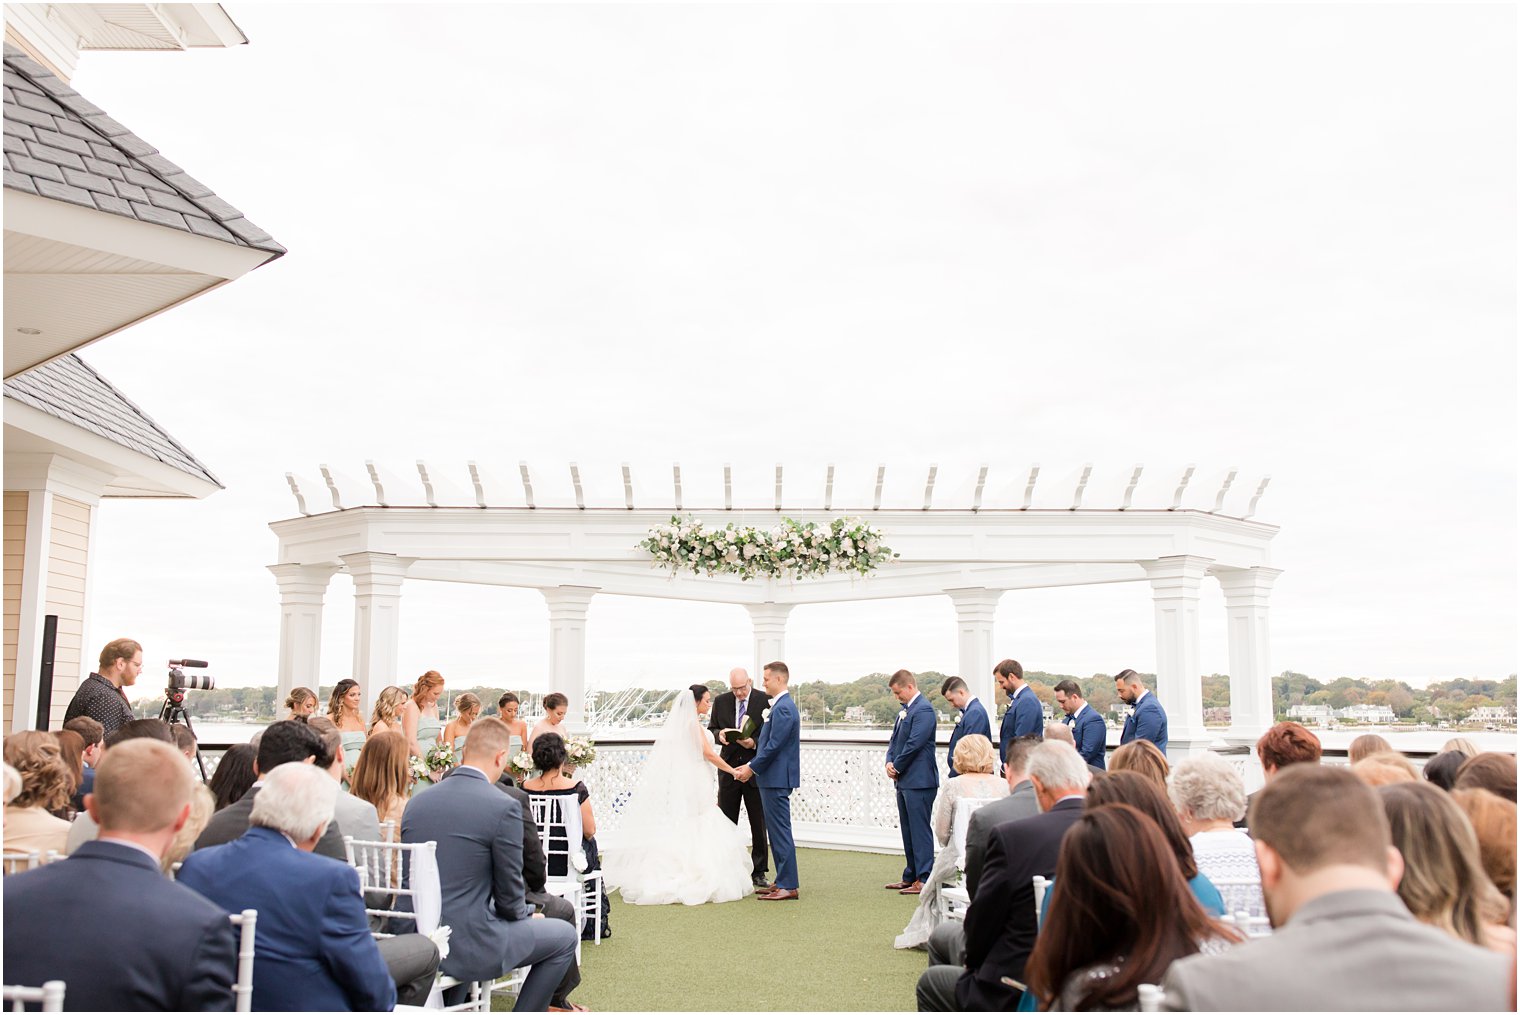 newlyweds exchange vows during Clarks Landing ceremony overlooking water